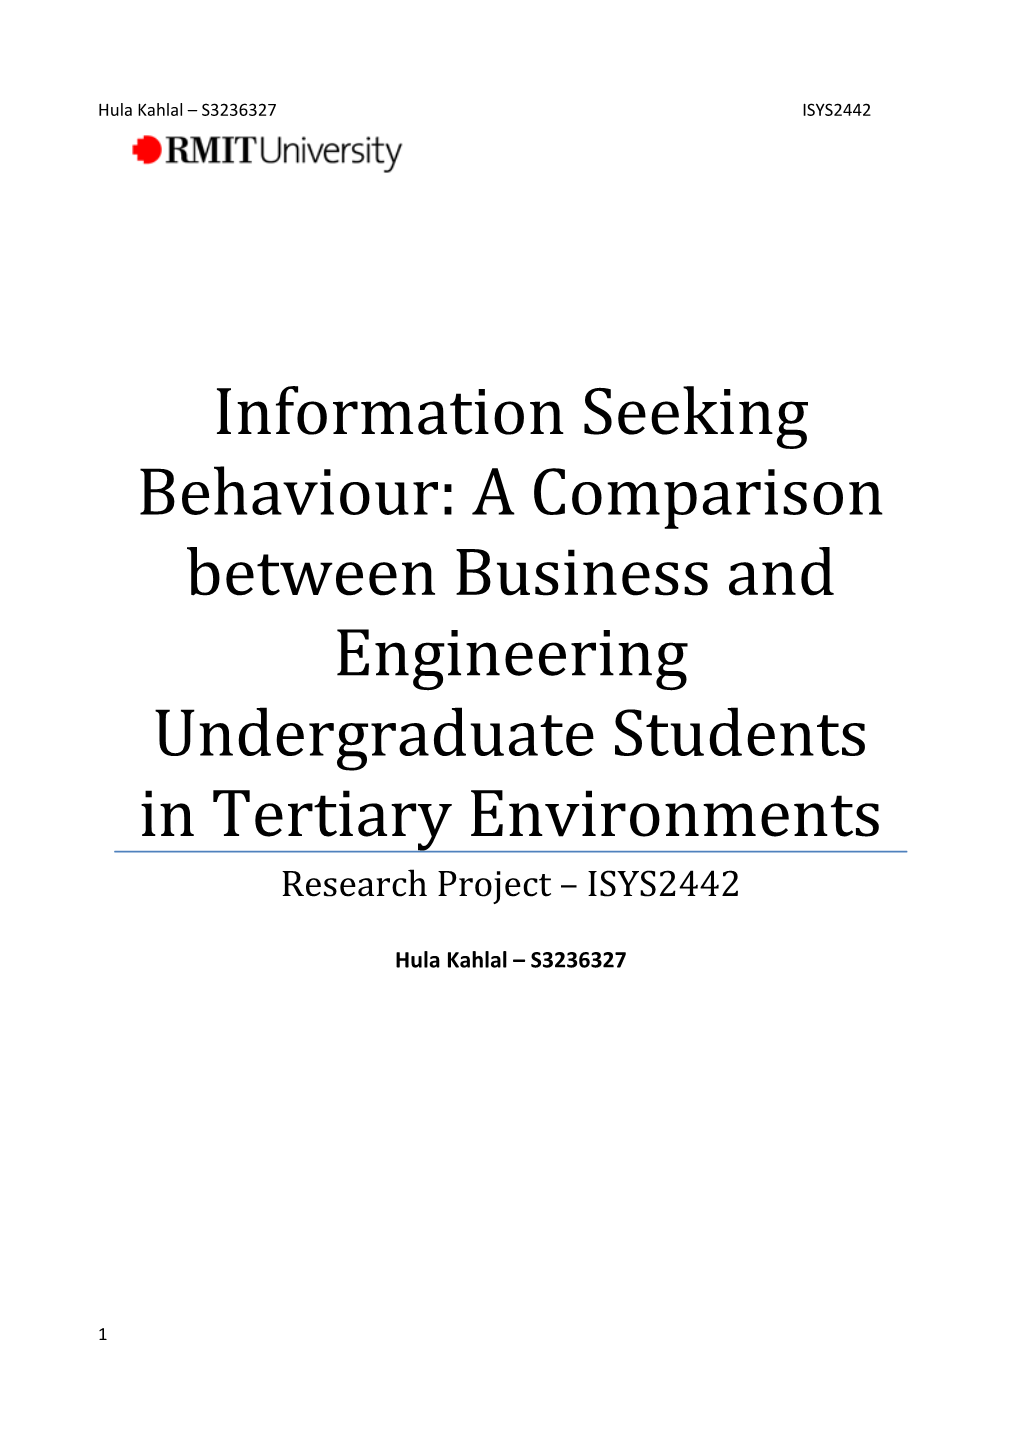 Information Seeking Behaviour: a Comparison Between Business and Engineering Undergraduate